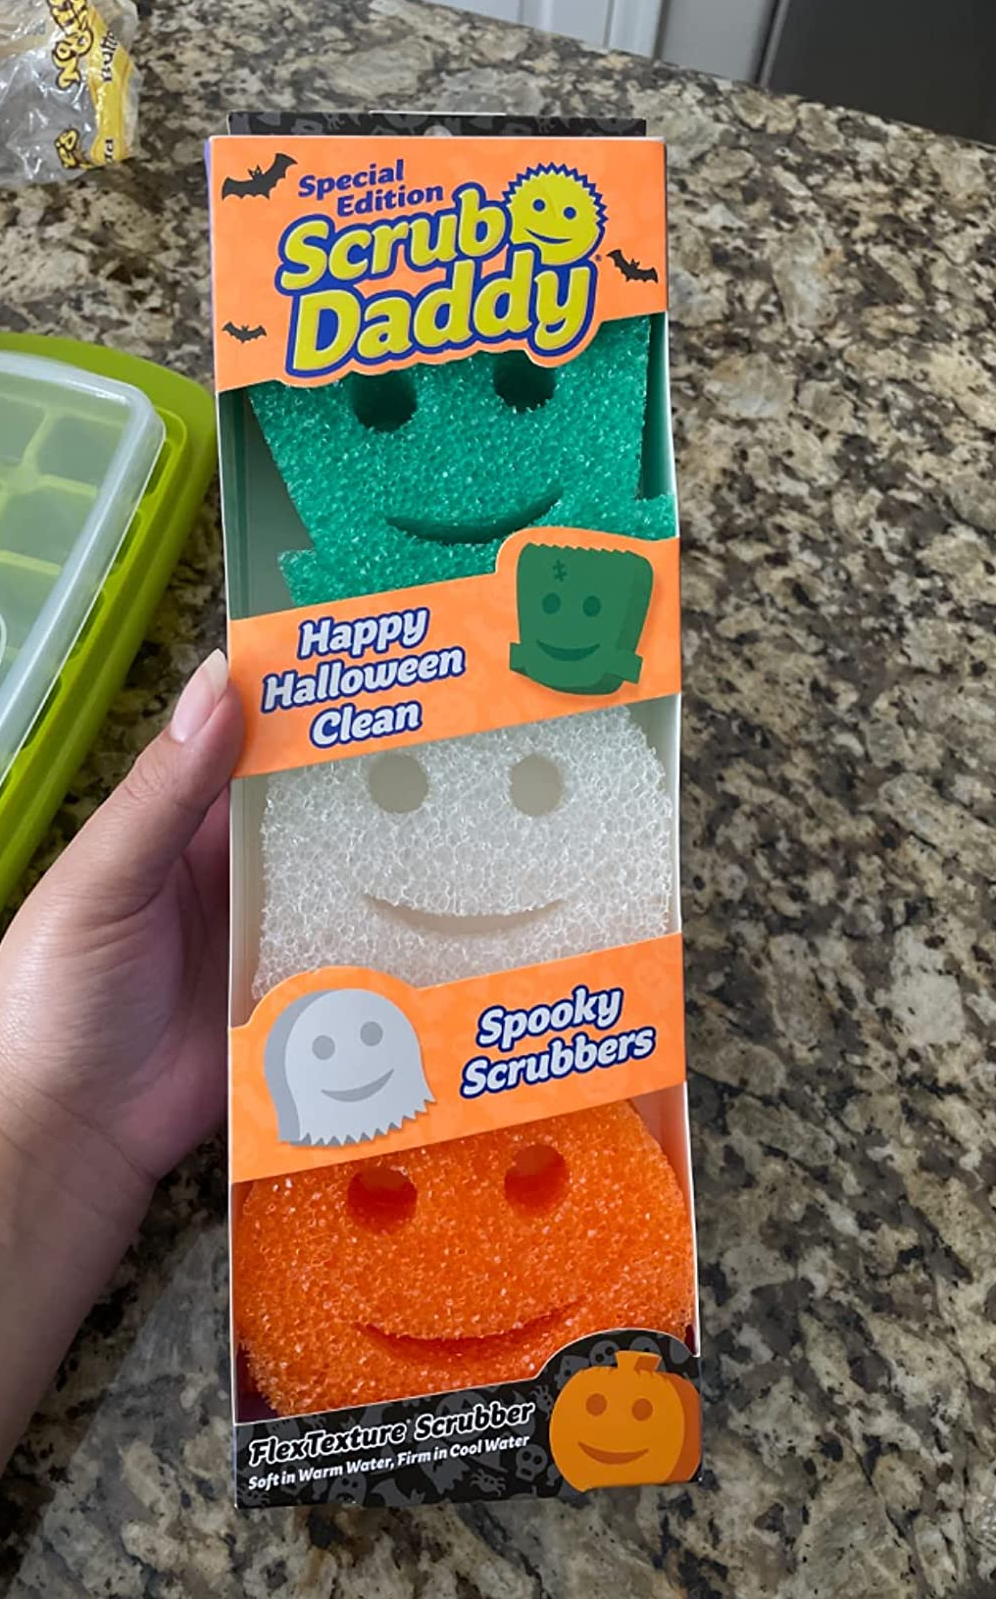 Scrub Daddy FlexTexture Scrubber Roll Sponge, 8 Count 